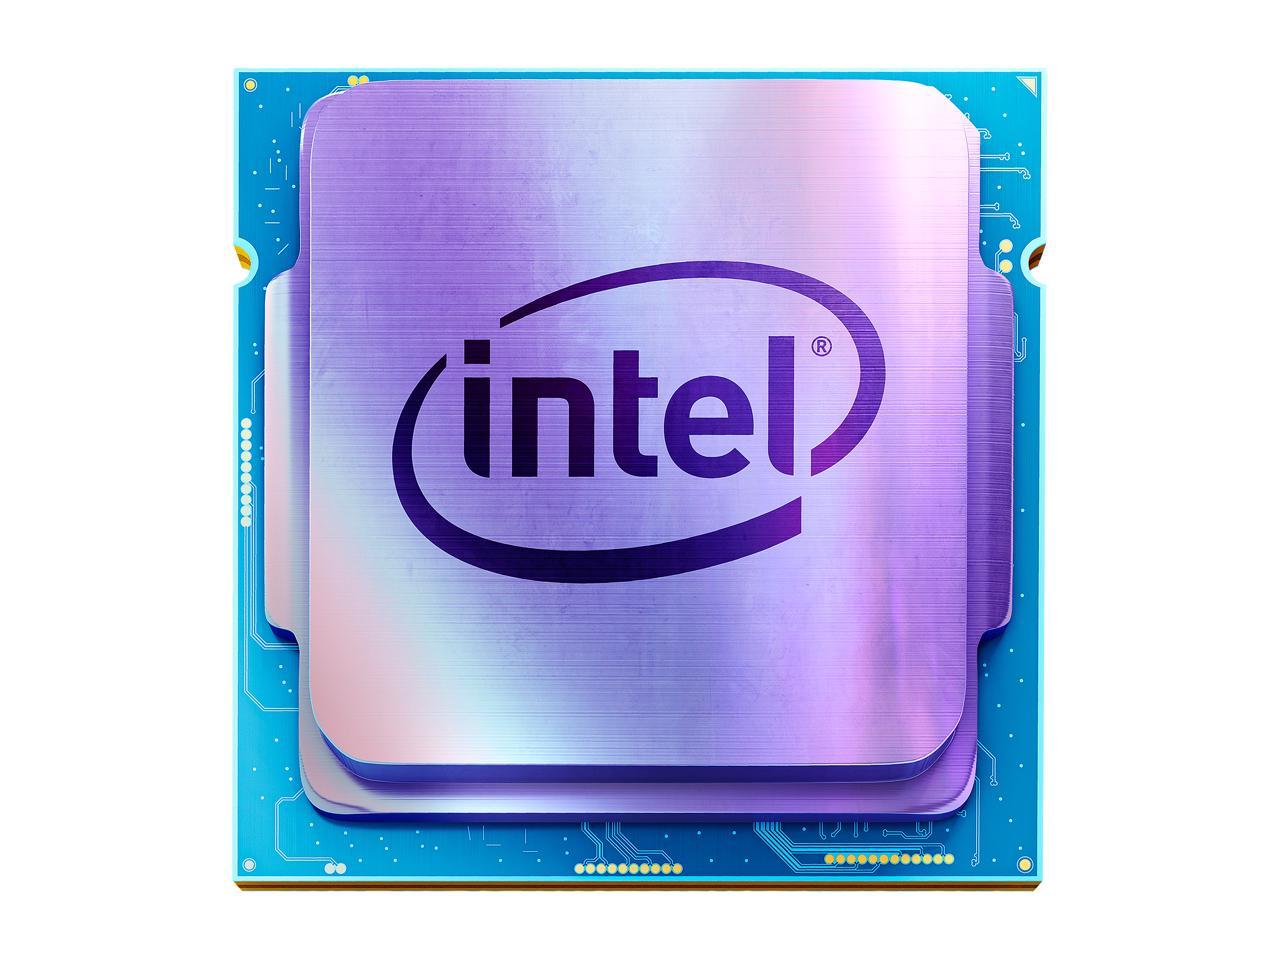 Intel Core i7 10th Gen - Core i7-10700K Comet Lake 8-Core 3.8 GHz LGA 1200  125W Desktop Processor w/ Intel UHD Graphics 630